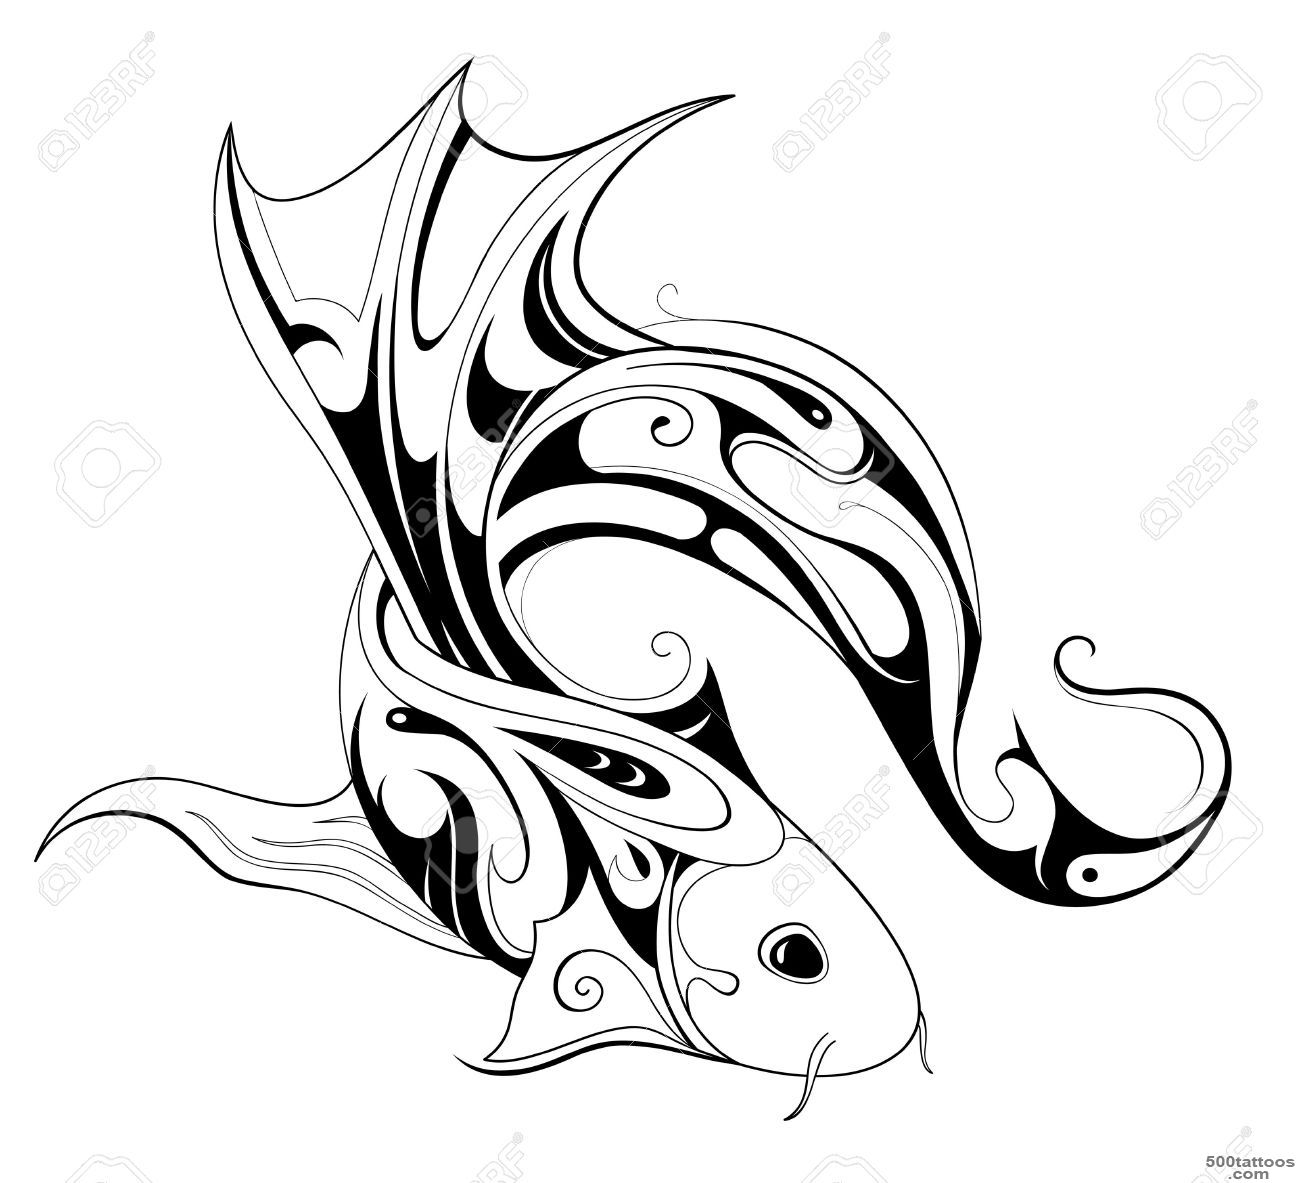 Koi Fish Tattoo Images, Stock Pictures, Royalty Free Koi Fish ..._34